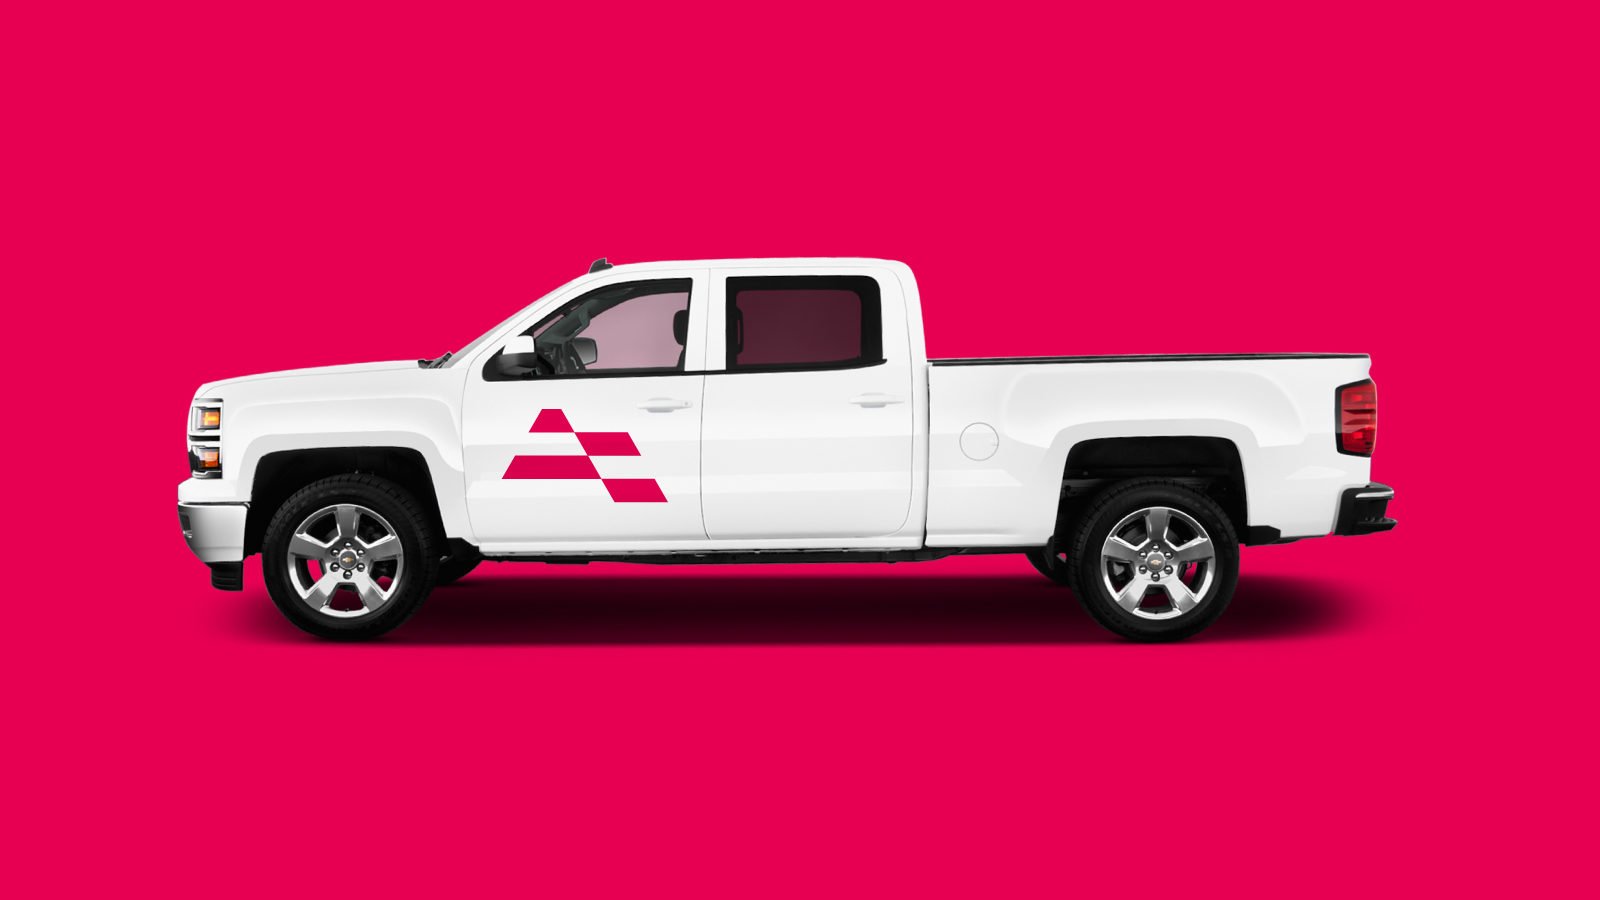 Ashley Energy Civic Brand Identity Truck by Bullhorn Creative